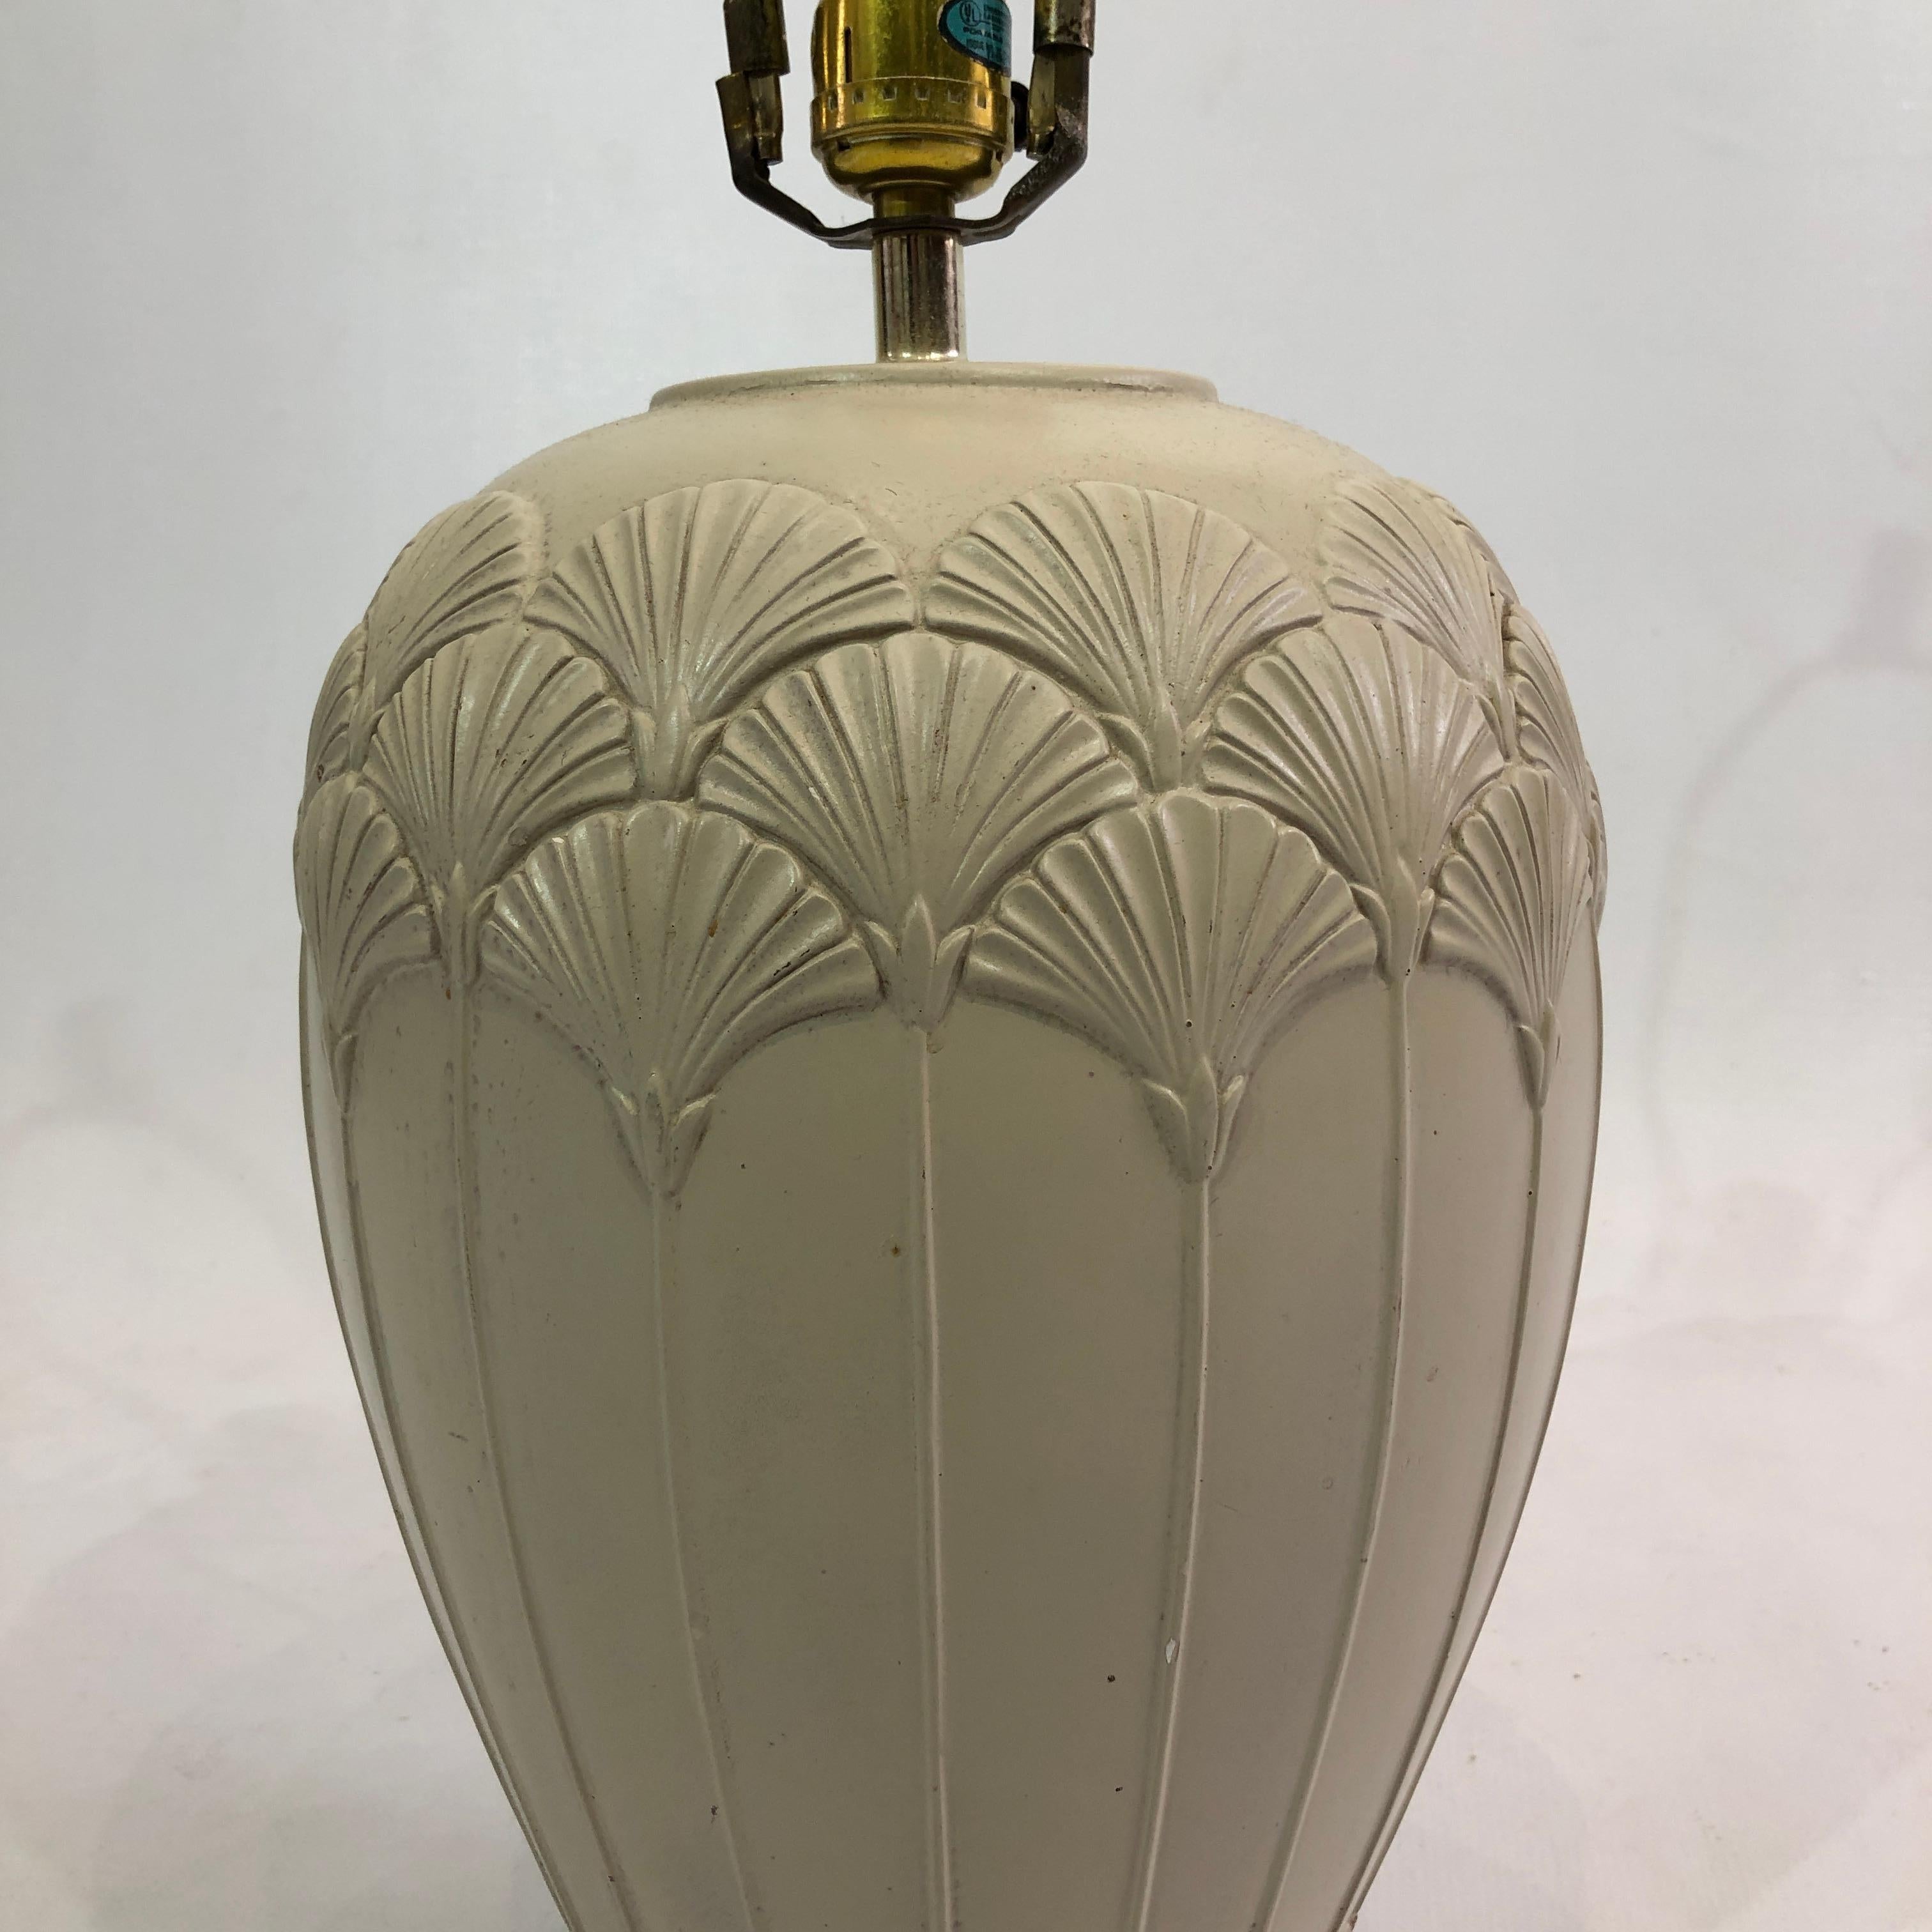 Post-Modern Cream Ceramic Shell Table Lamp 1980s USA Vintage Art Deco Miami Post Modern For Sale